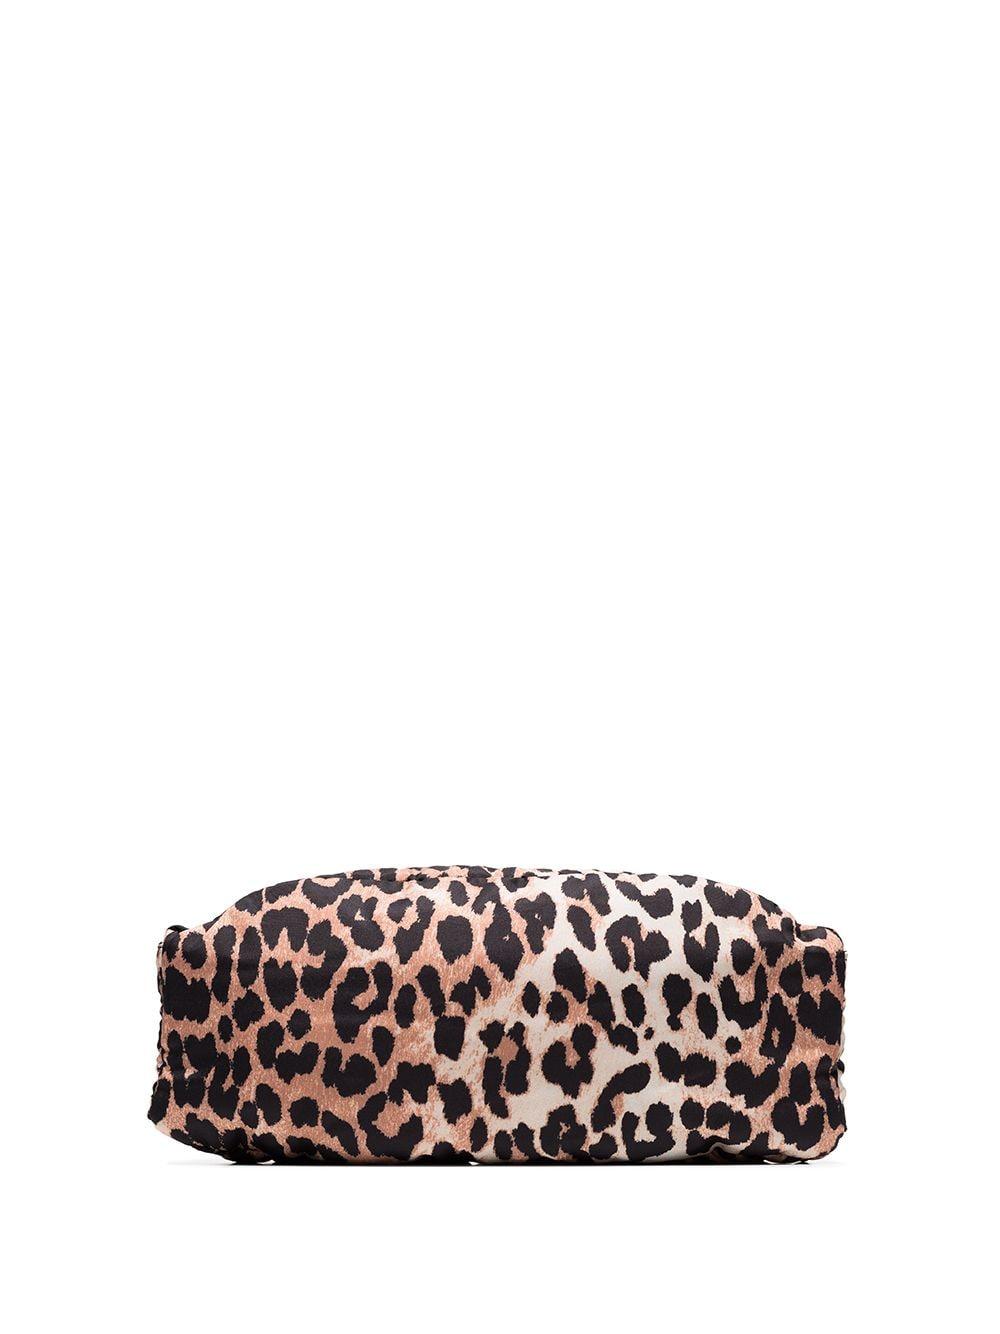 Ganni Leopard Print Belt Bag in Brown - Lyst